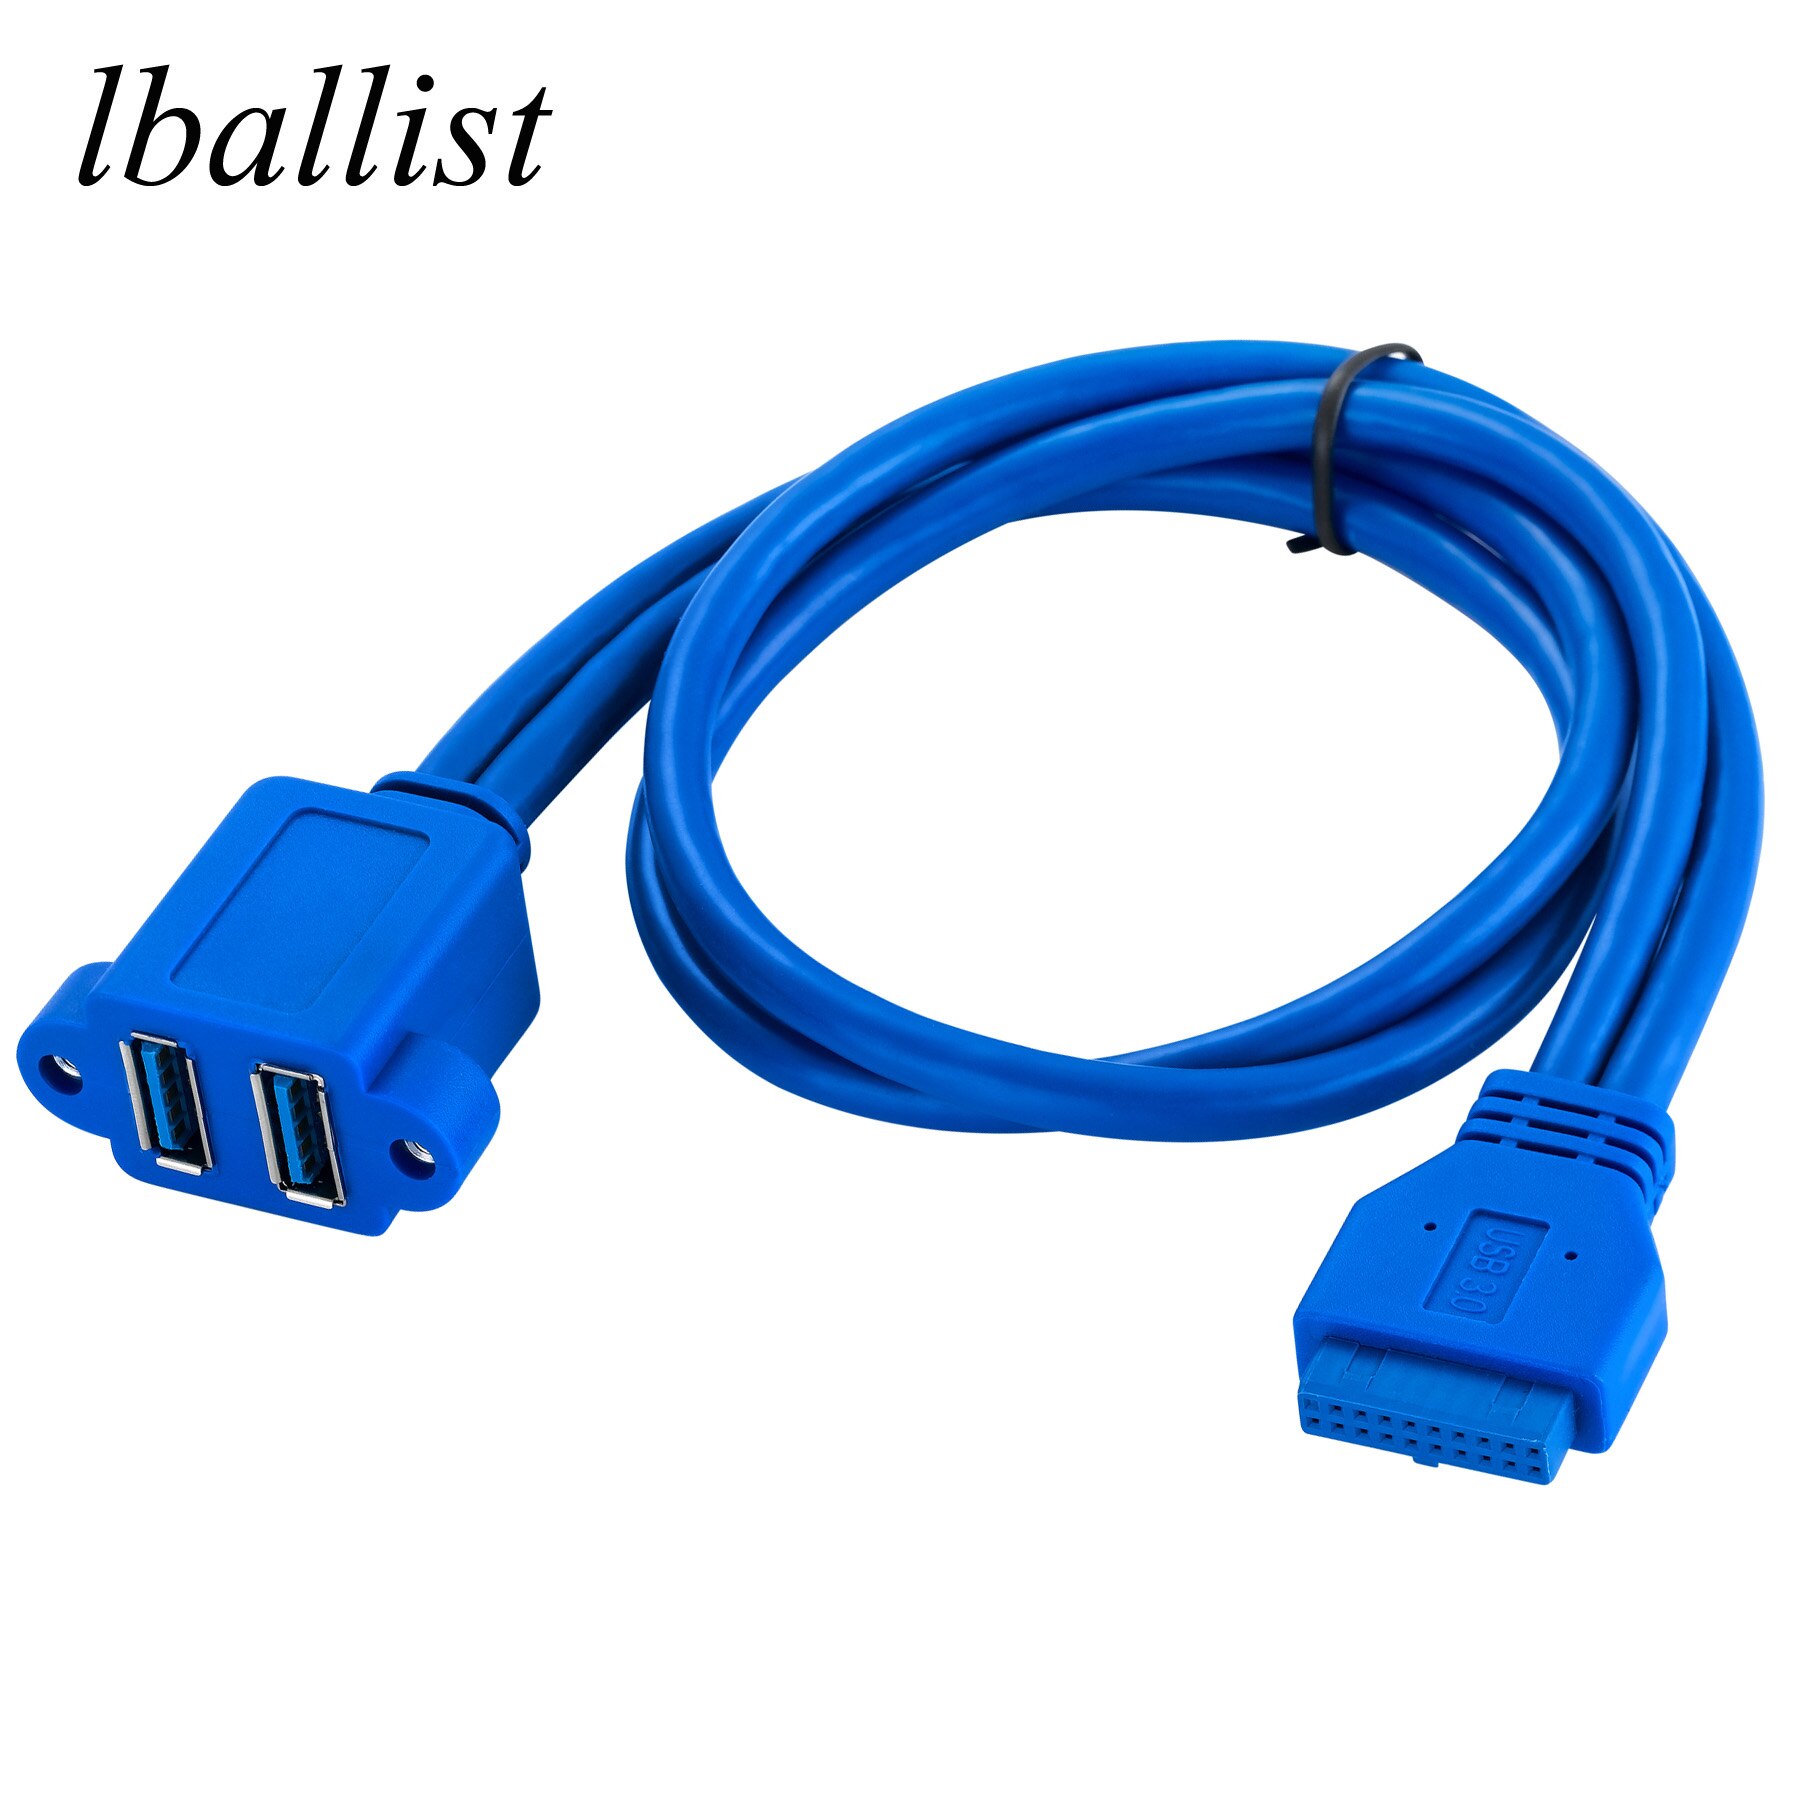 Lballist   USB 3.0   ̺,  ..